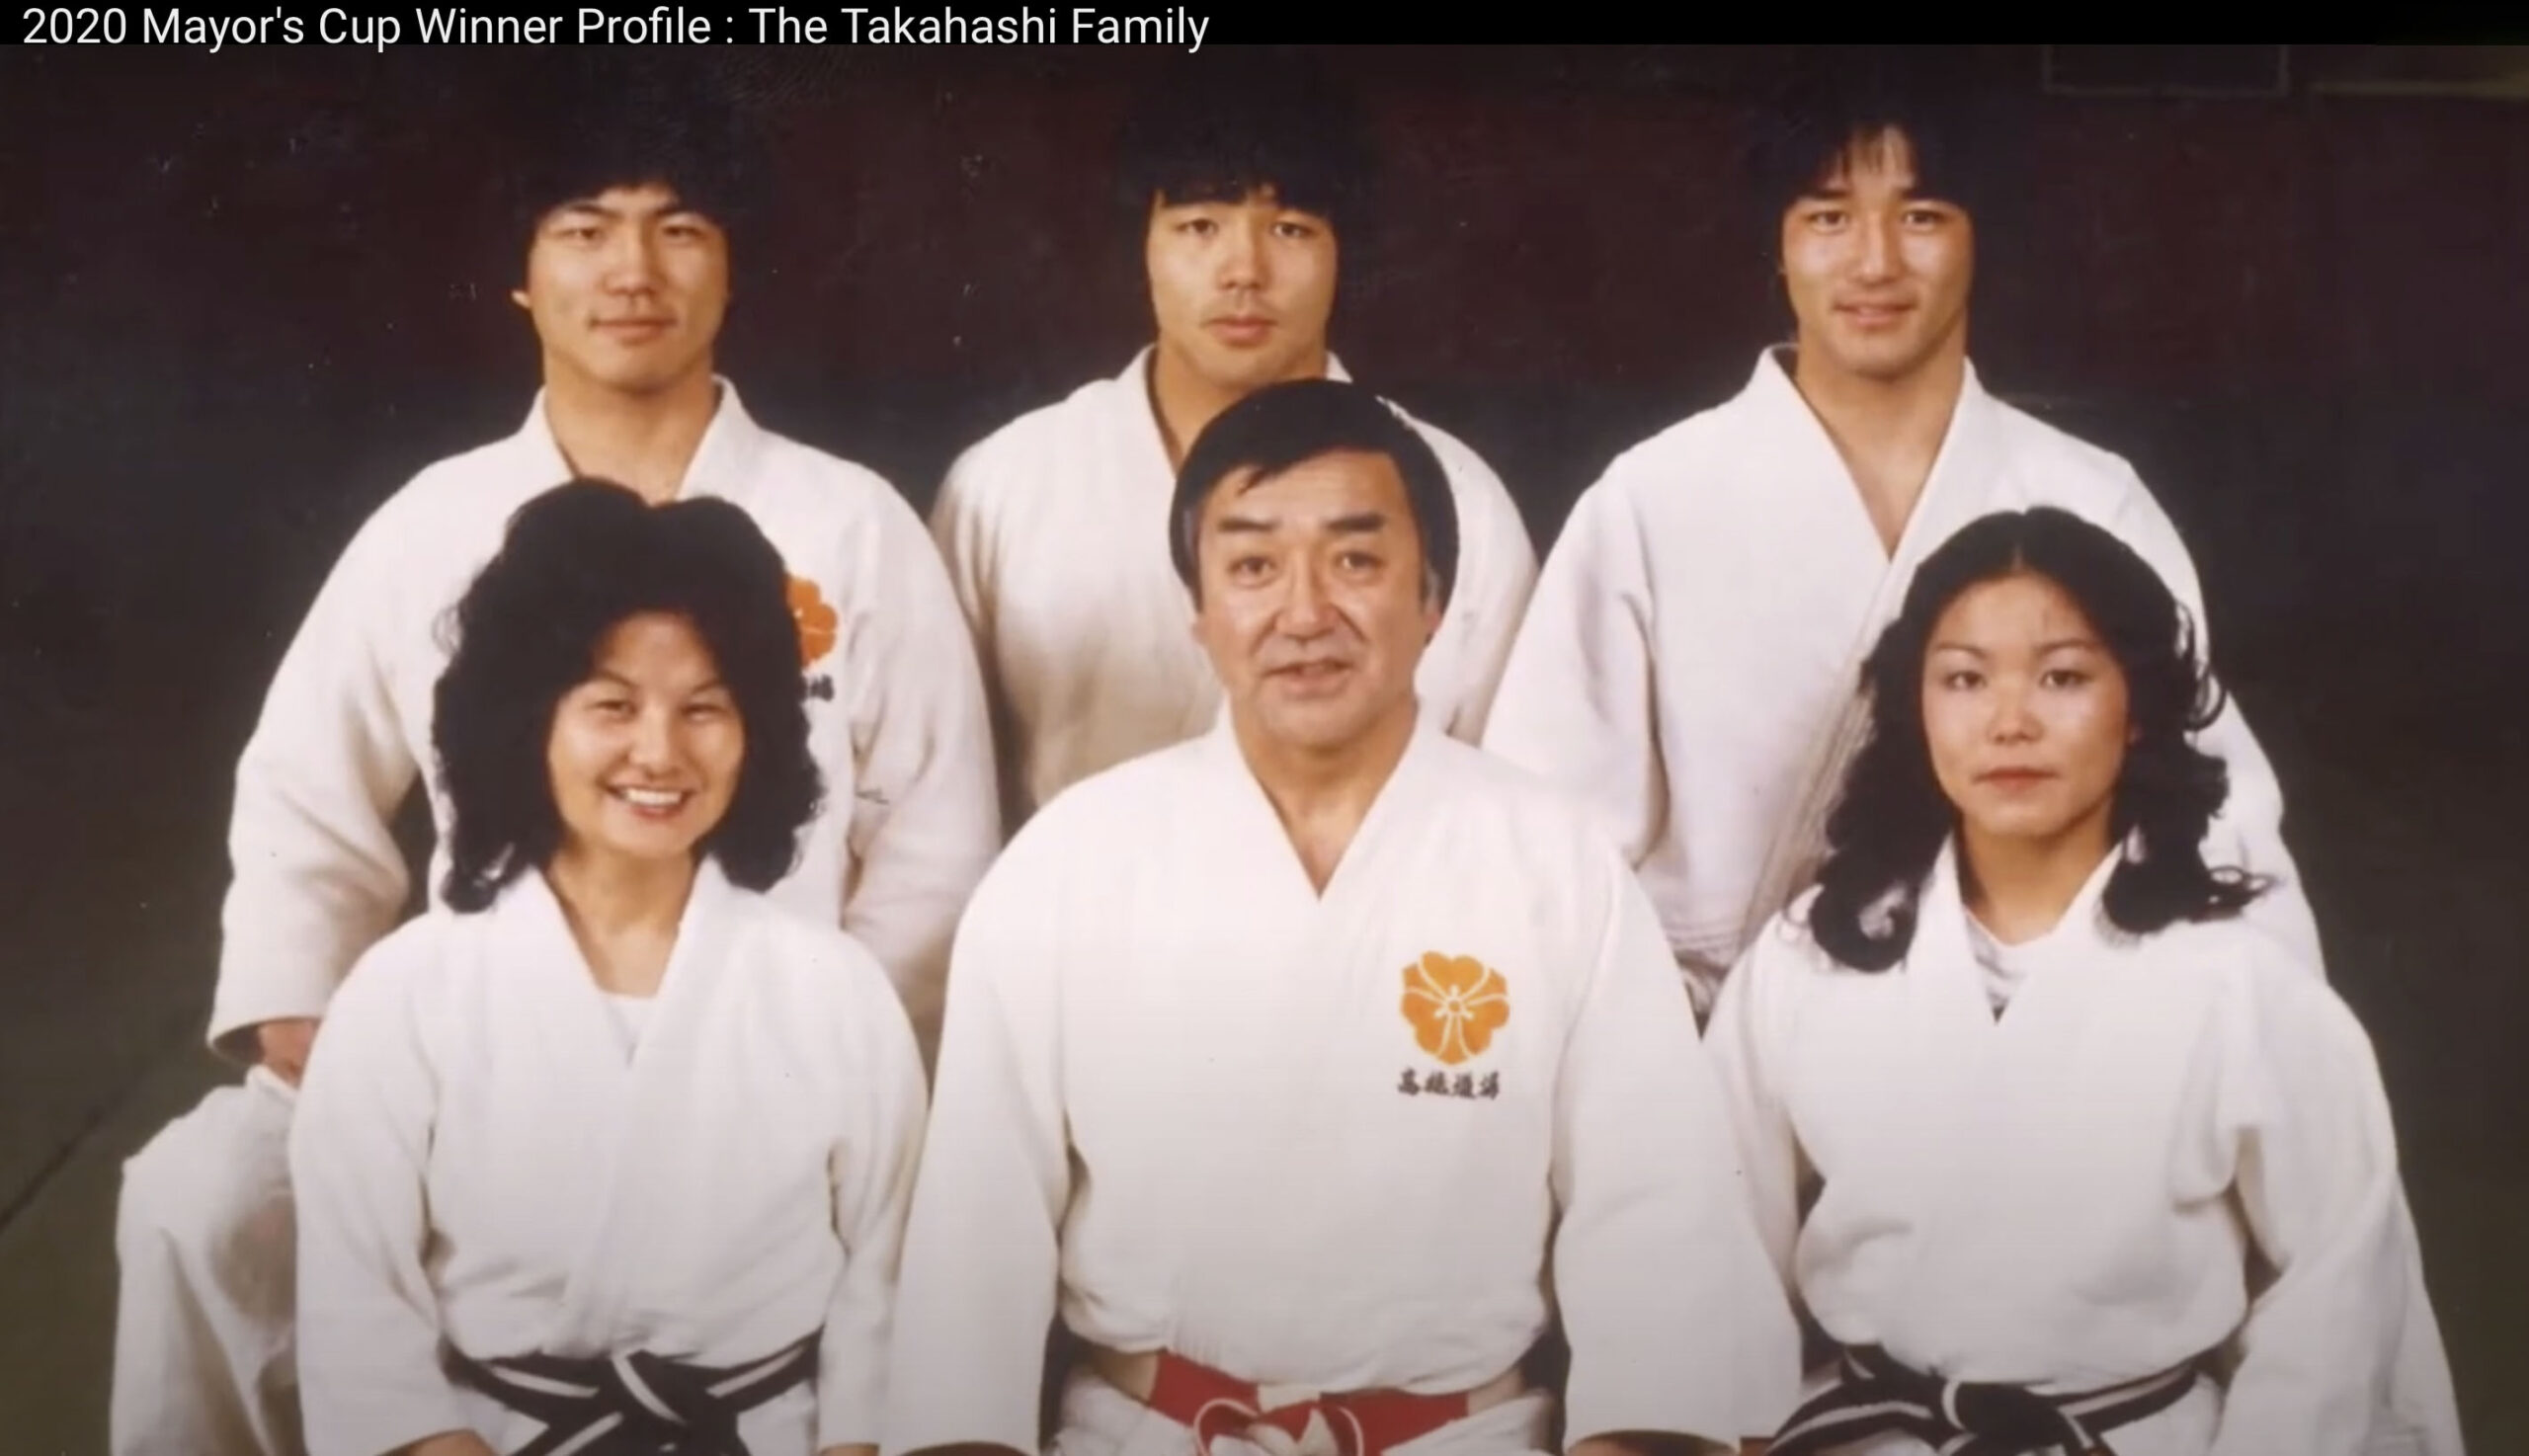 The Takahashi Family